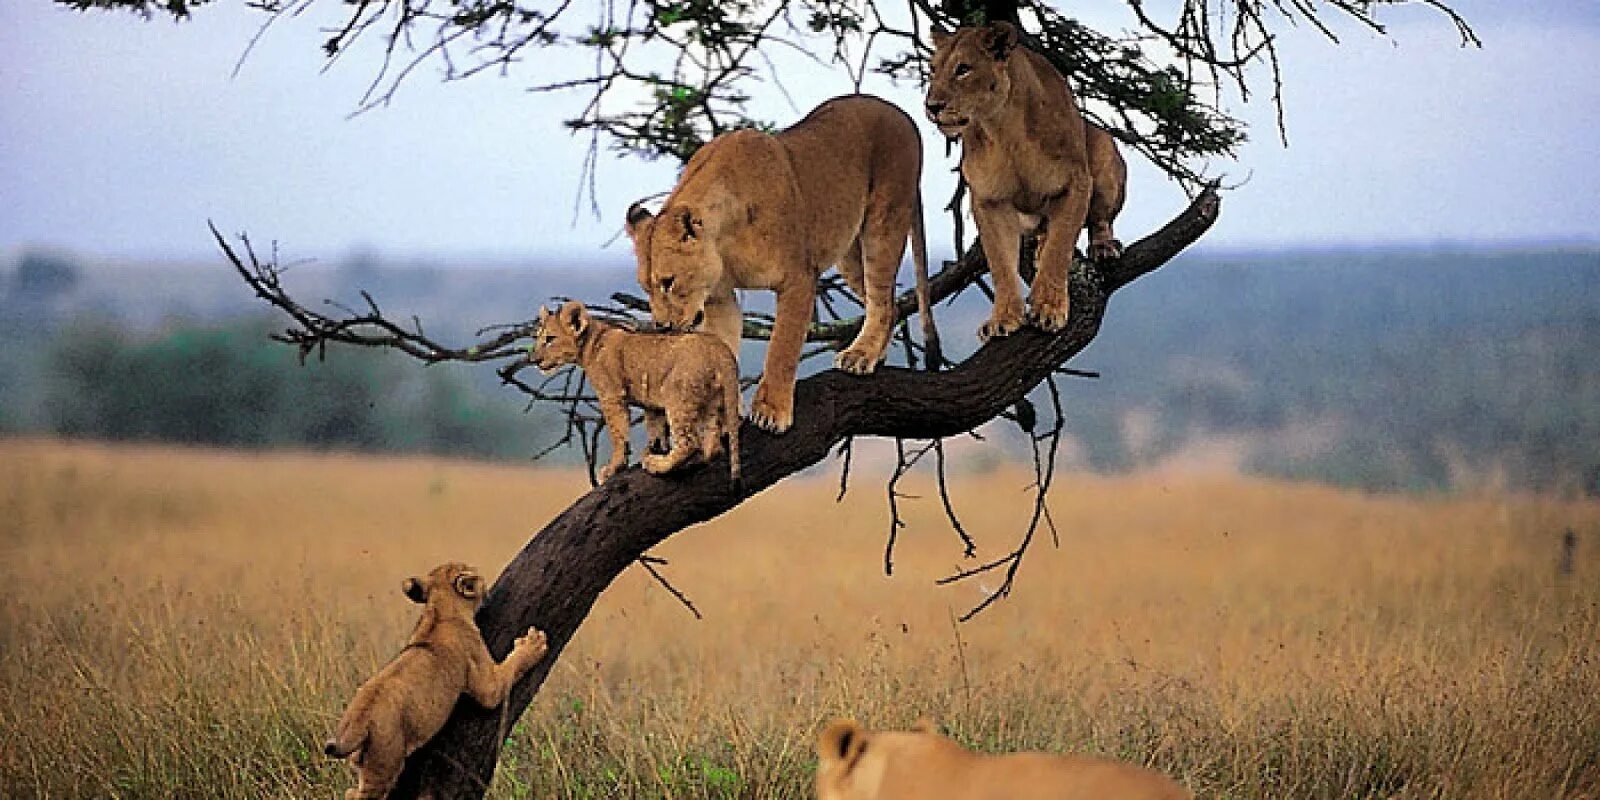 People and wildlife. Национальный парк Серенгети Танзания. Национальный парк Танзании Серенгети животные. Серенгети Танзания национальный парк львы. Парк Маньяра Танзания.